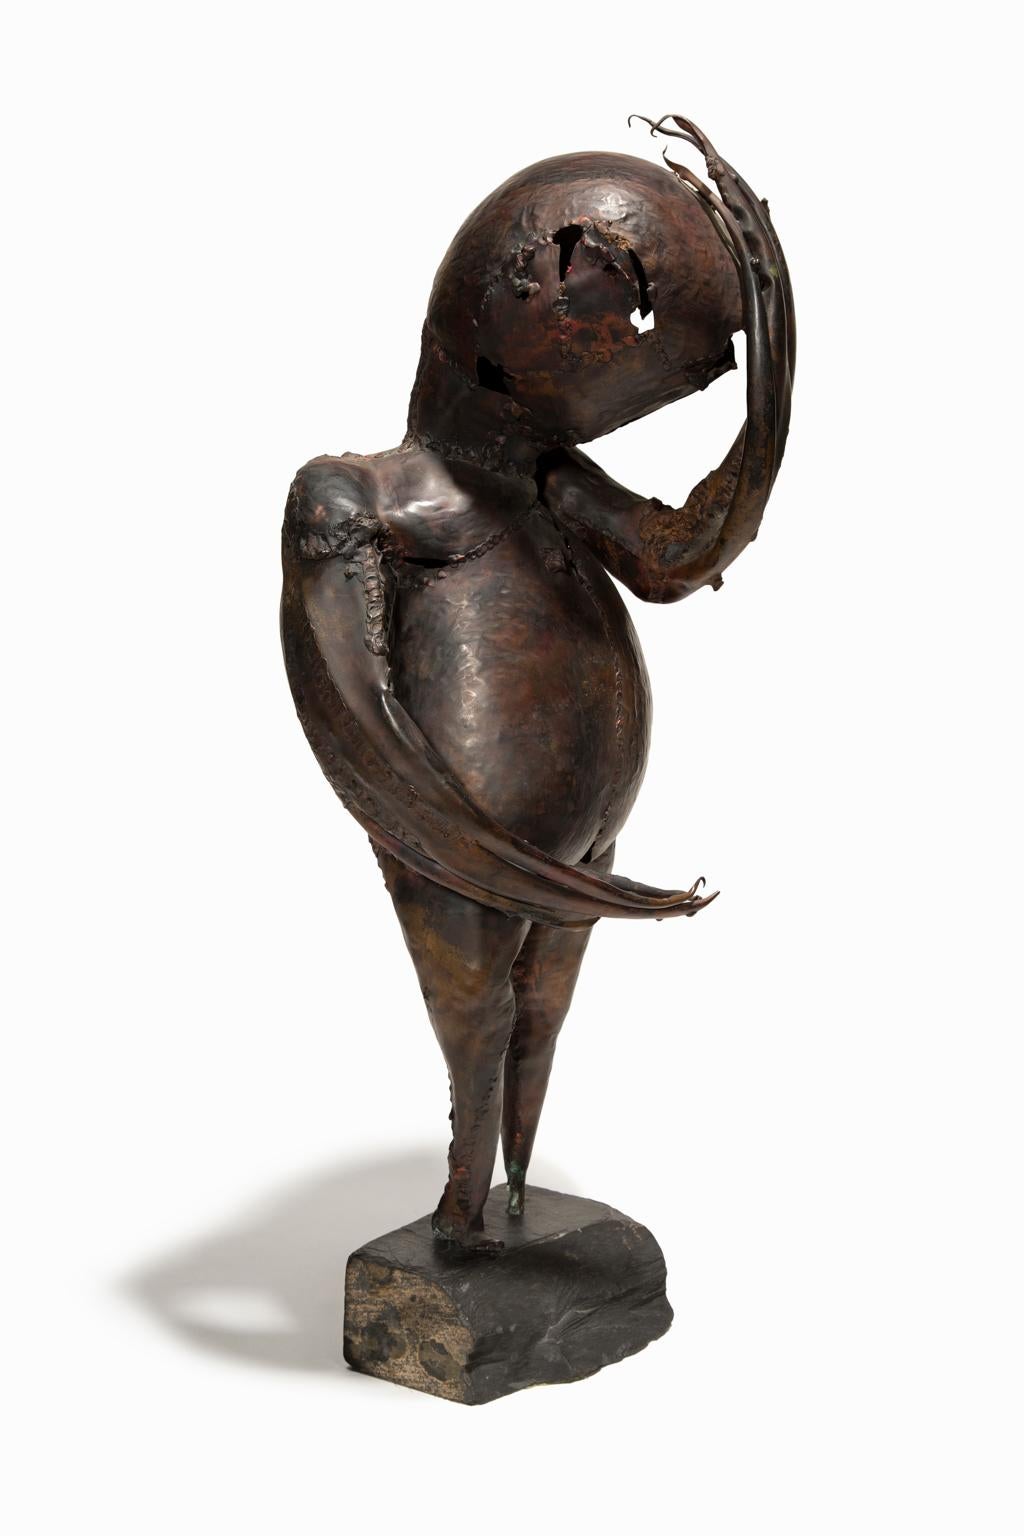 Reinhoud d'Haese Figurative Sculpture -  Reinhoud dHaese Sculpture Mythical Figure Copper & Stone